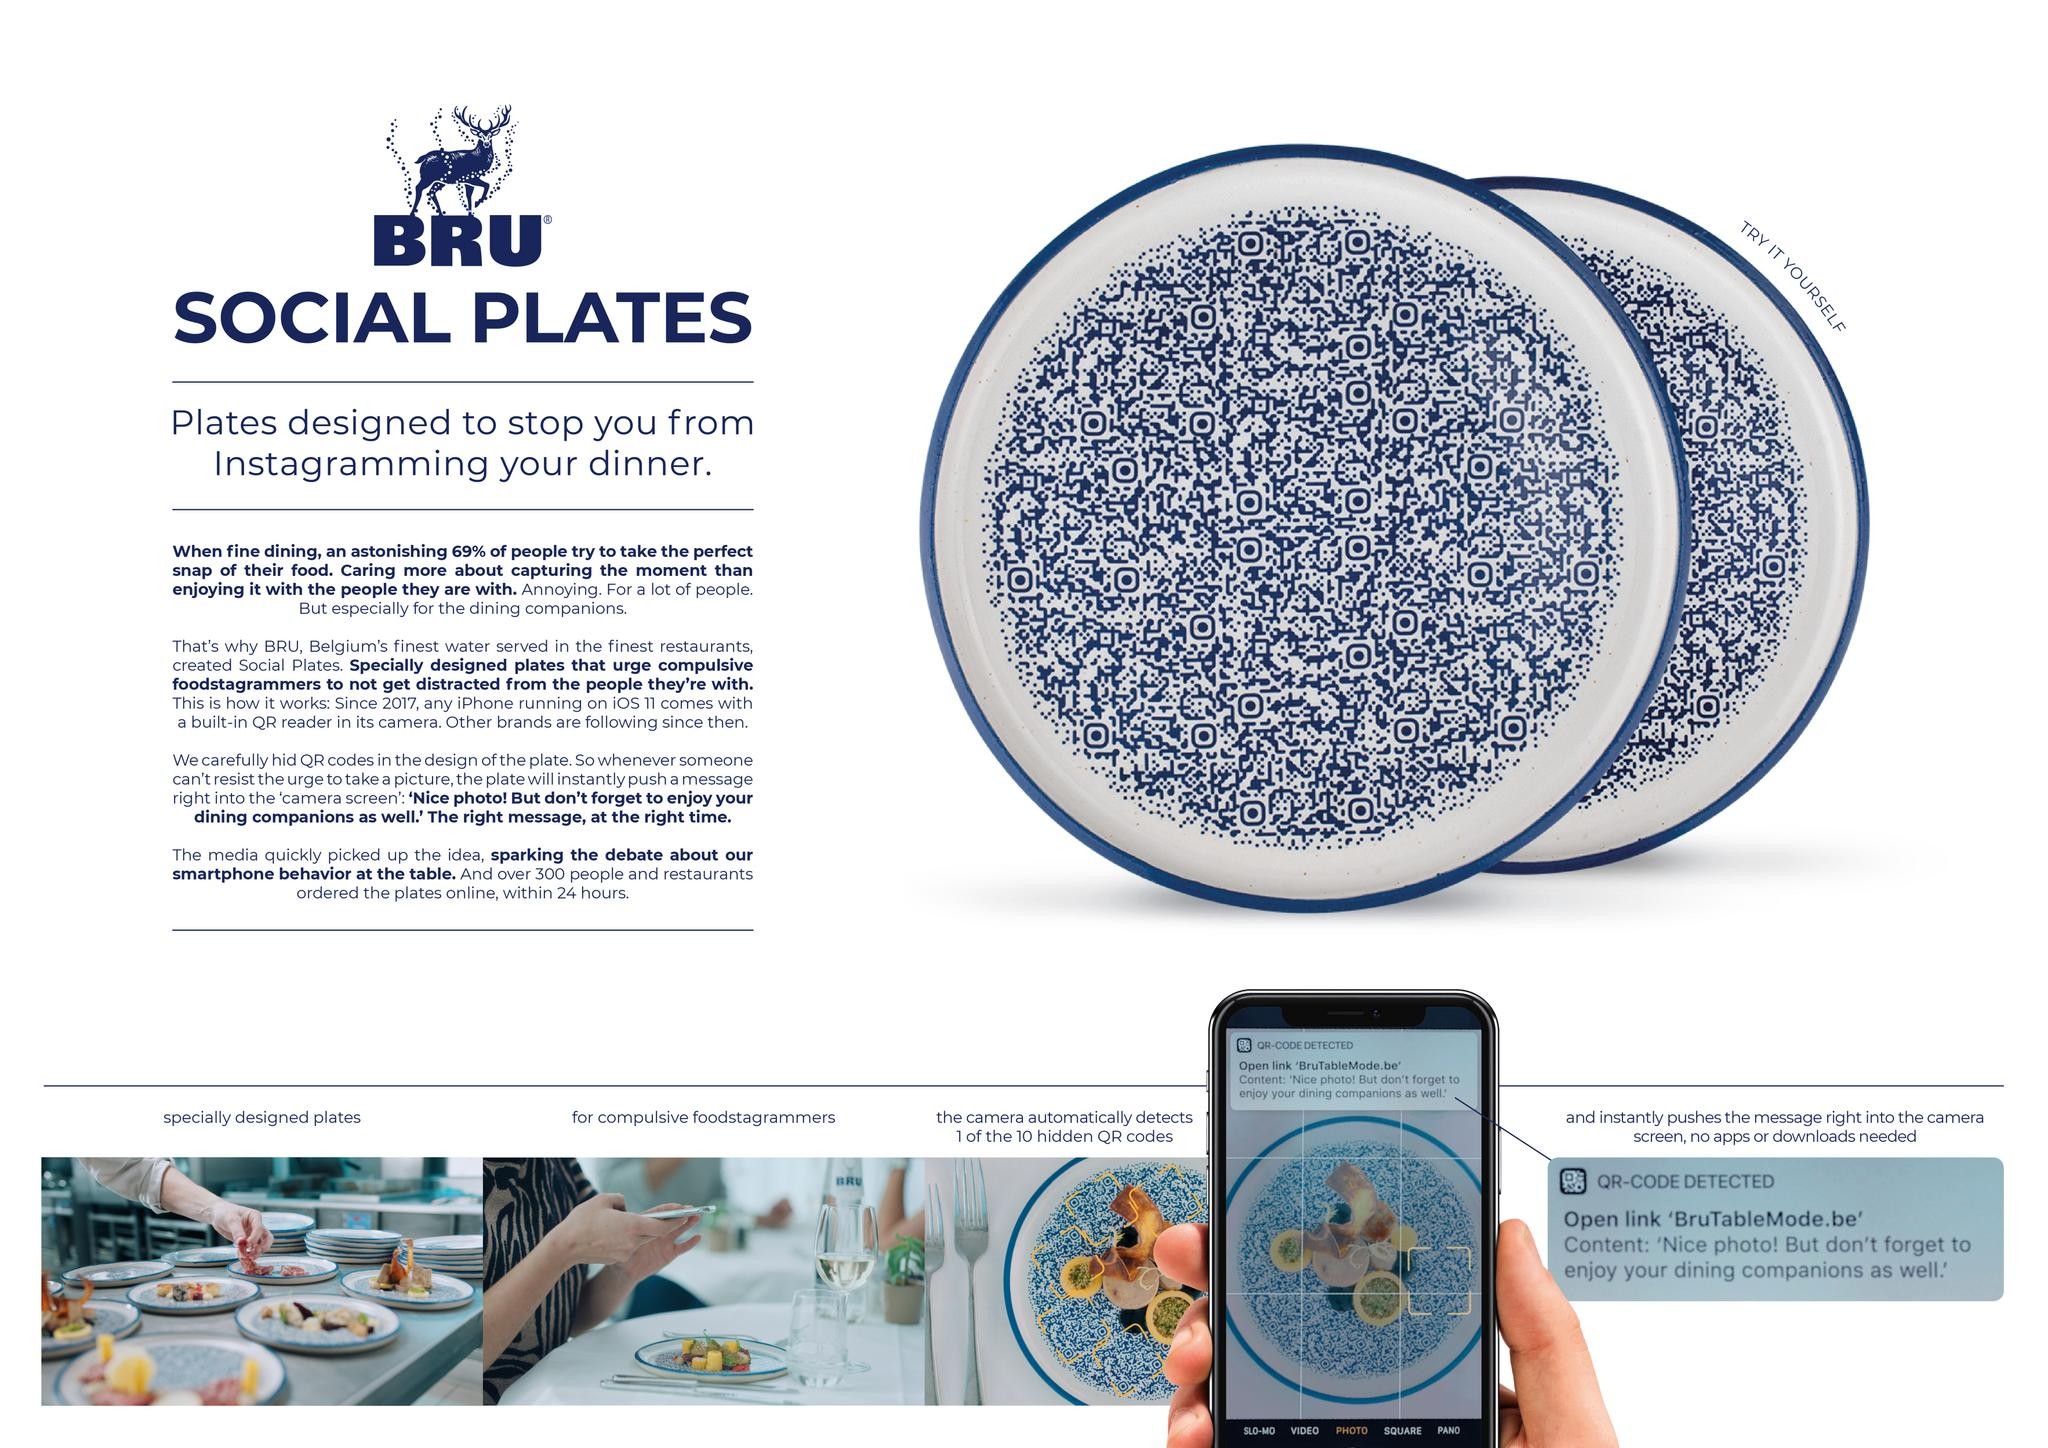 Social plates